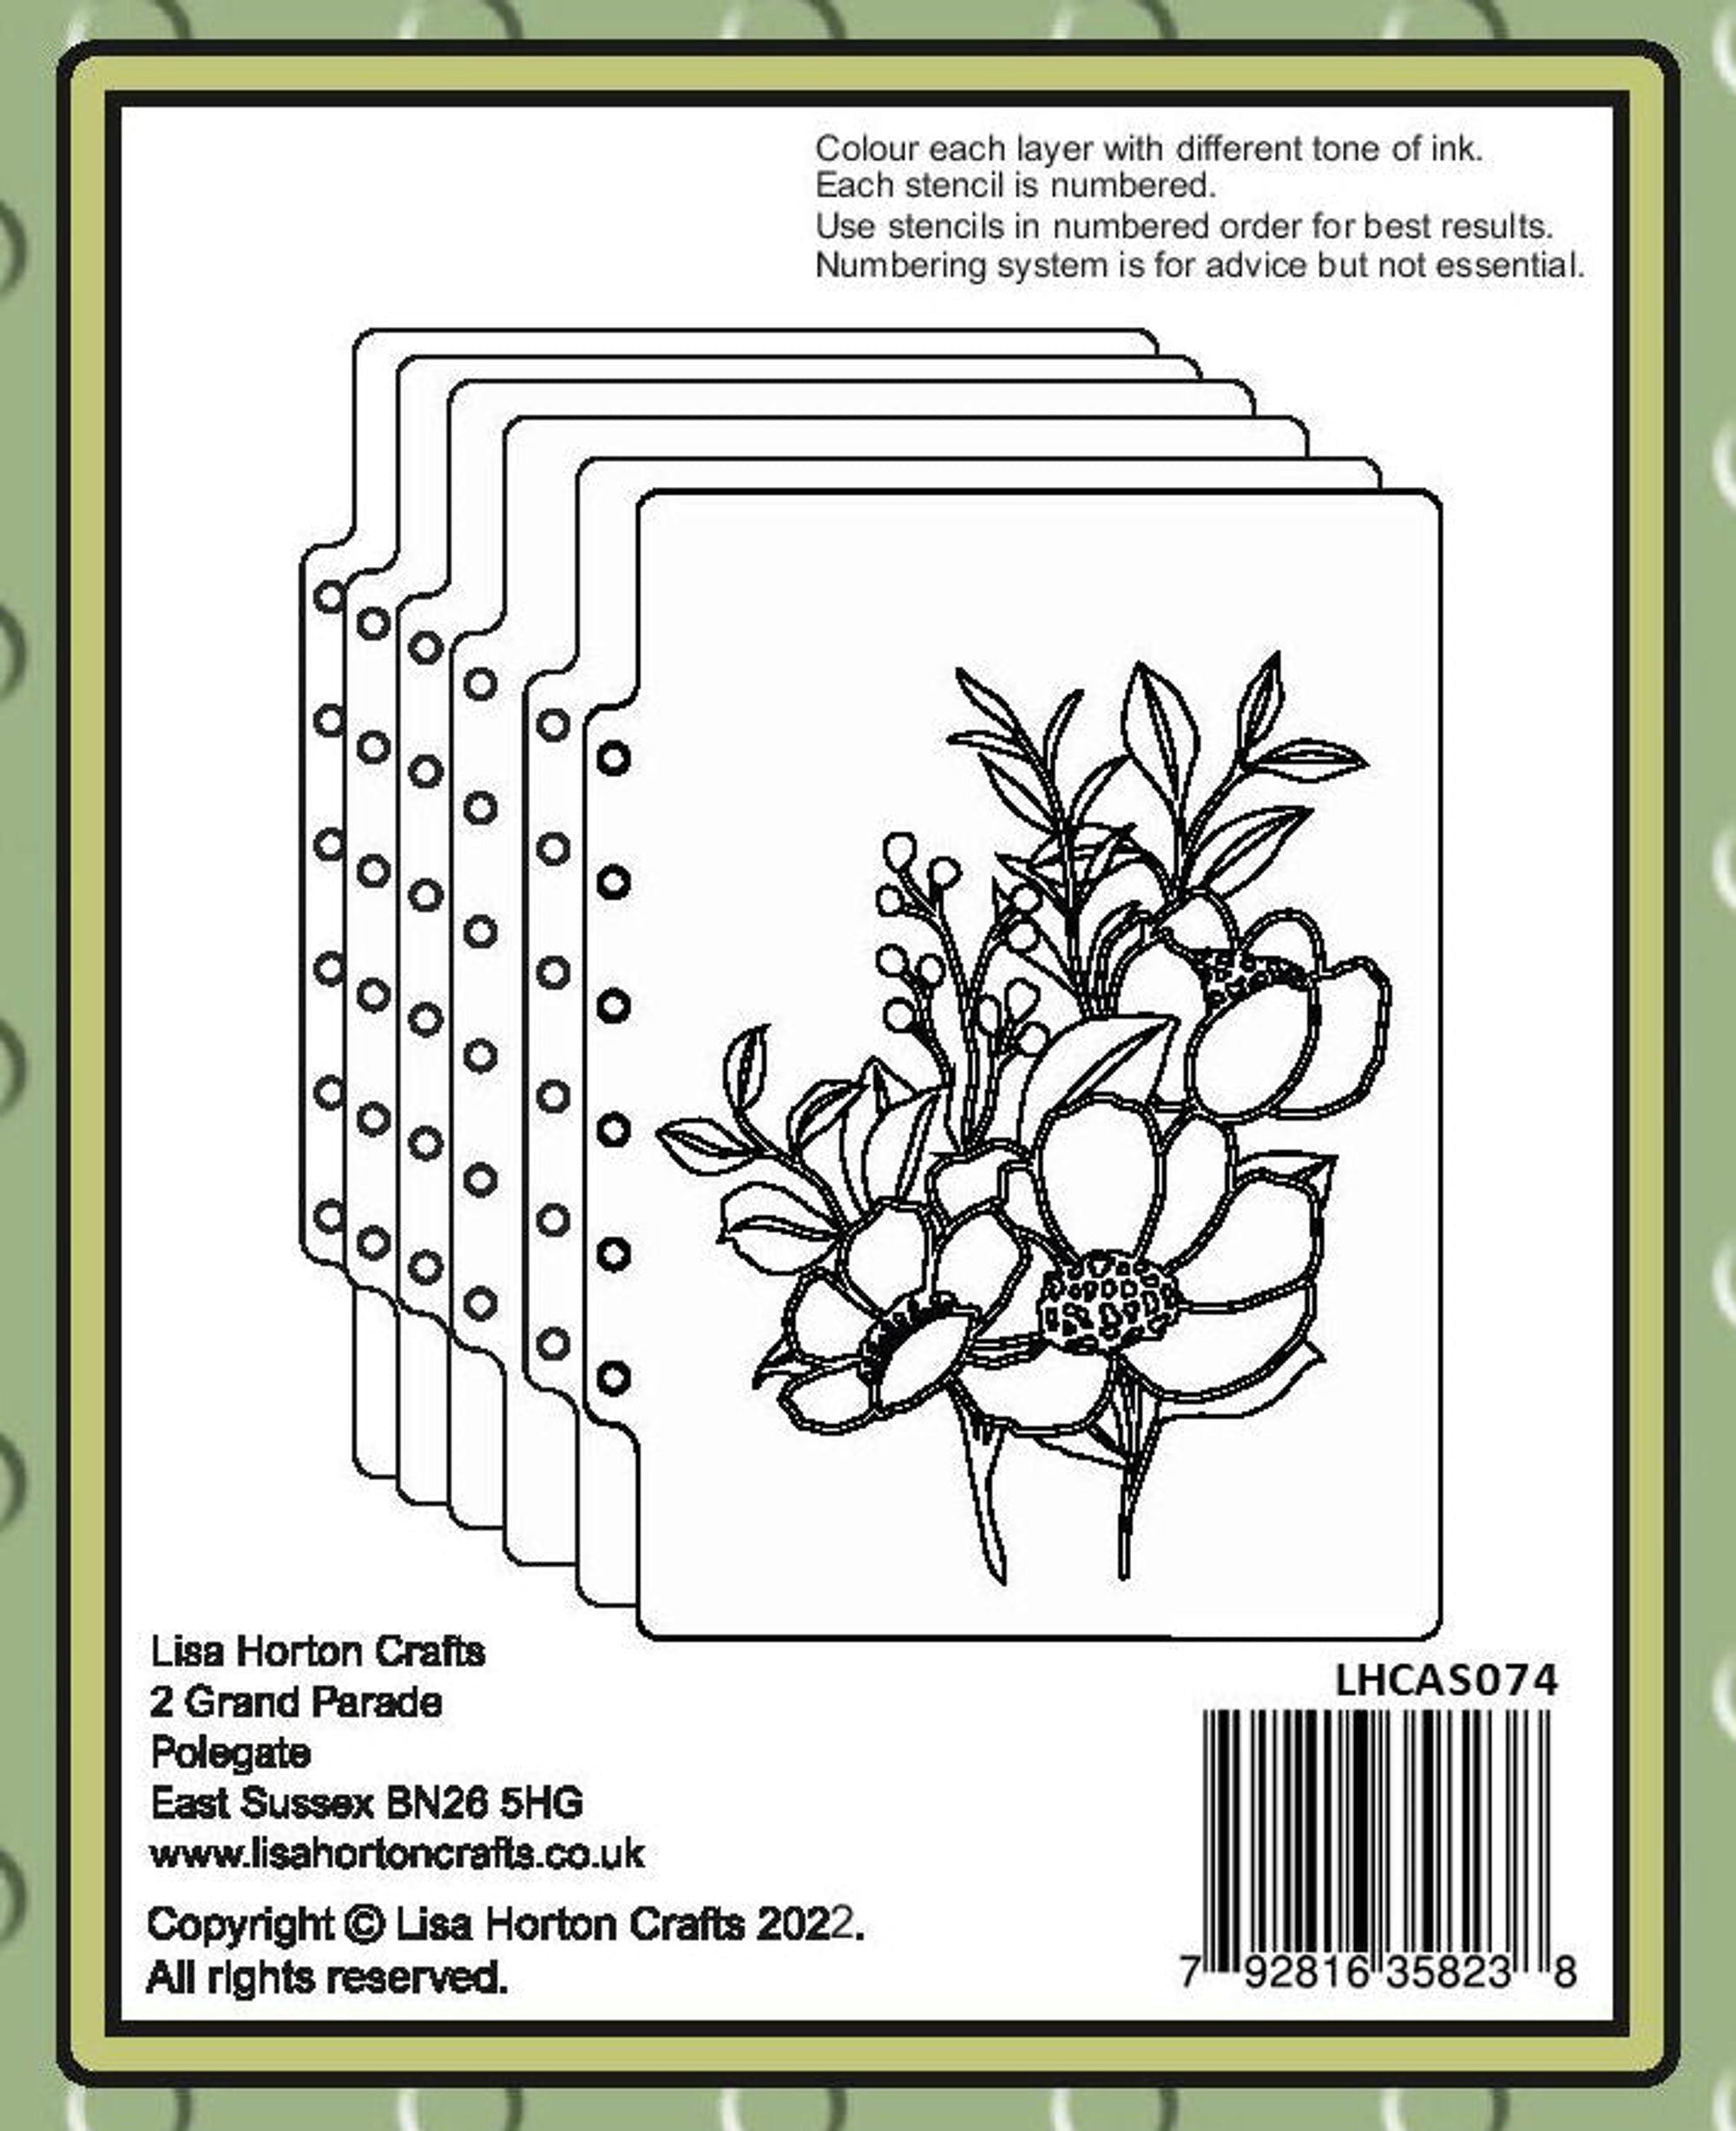 Lisa Horton 5x7 Layering Stencils - Spring Anemone